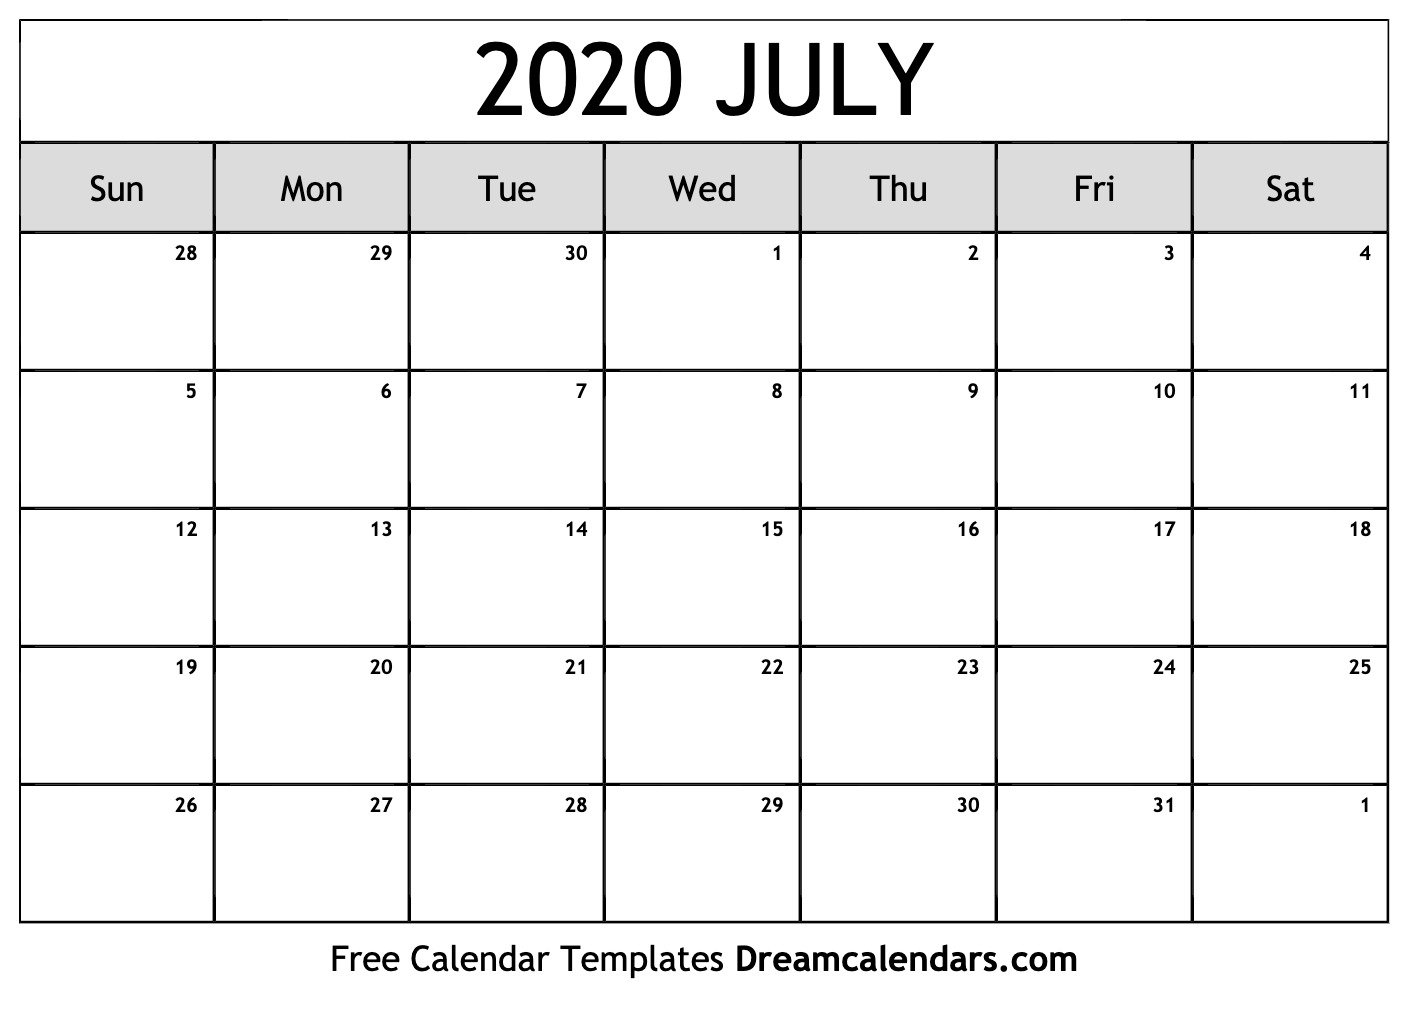 Calendar For 2020 July - Wpa.wpart.co